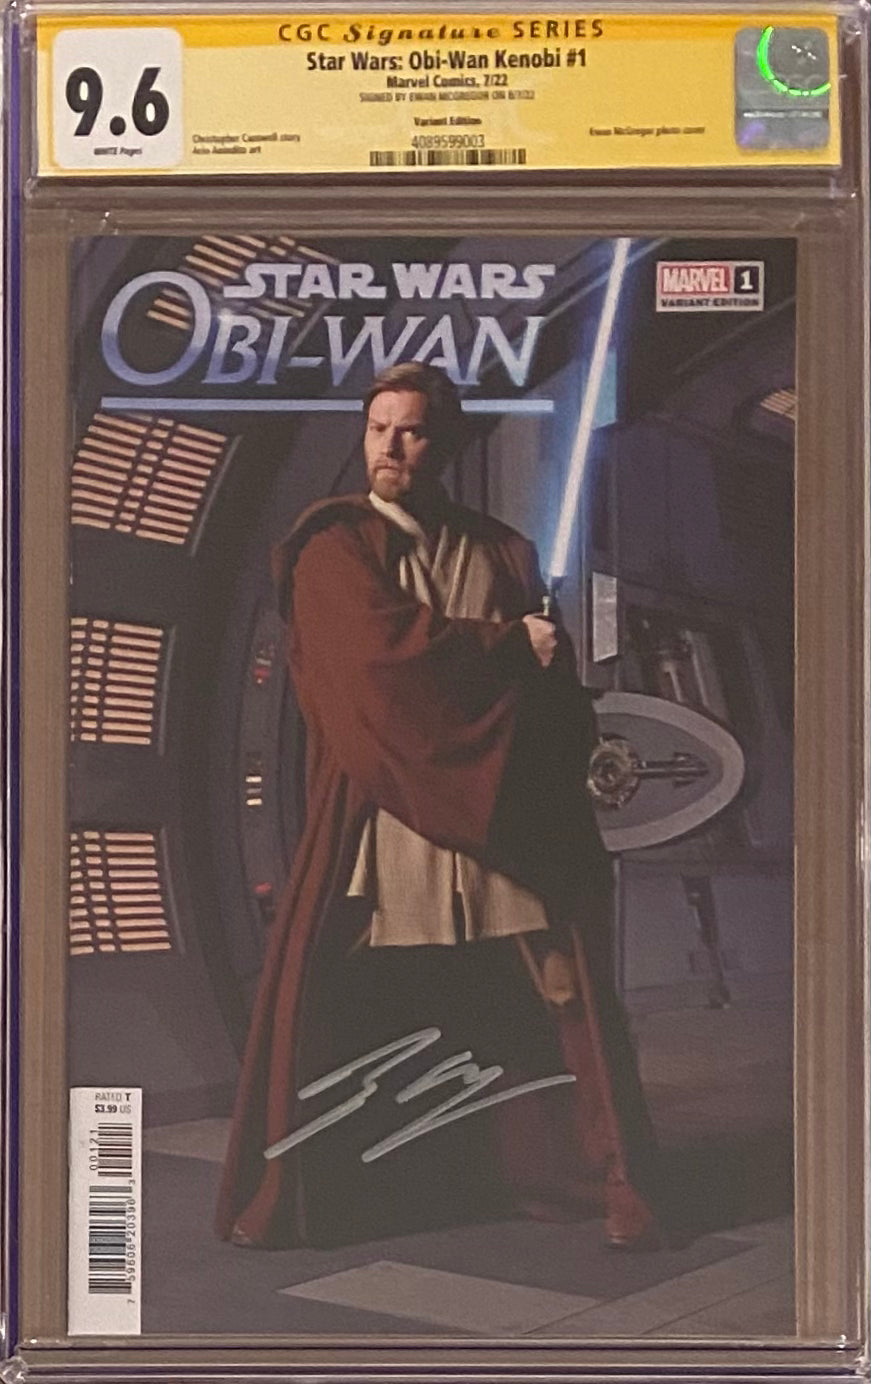 Star Wars: Obi-Wan Kenobi #1 Photo Variant CGC 9.6 SS - Ewan McGregor